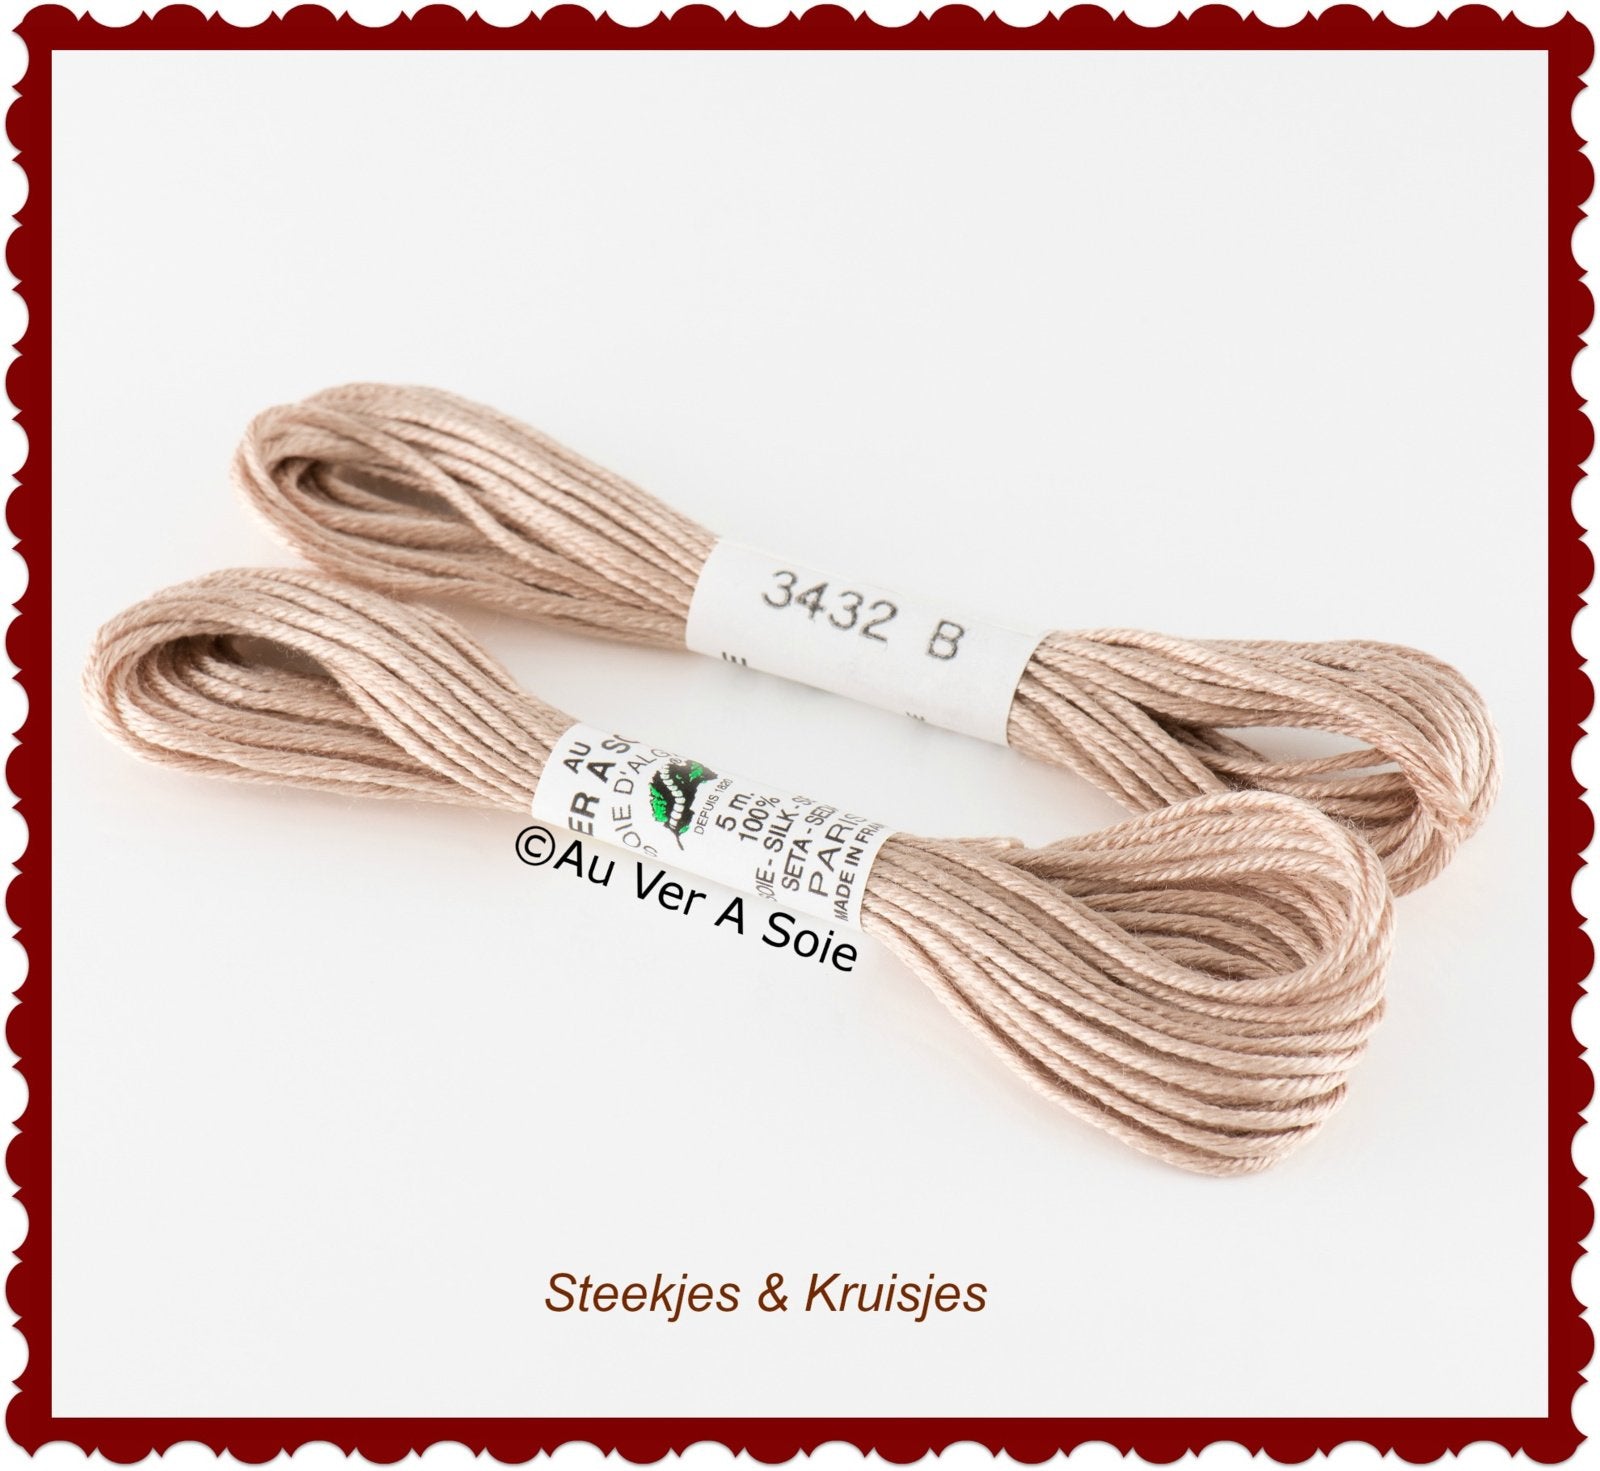 Au ver ie "soie d'alger" silk yarn color no. 3432